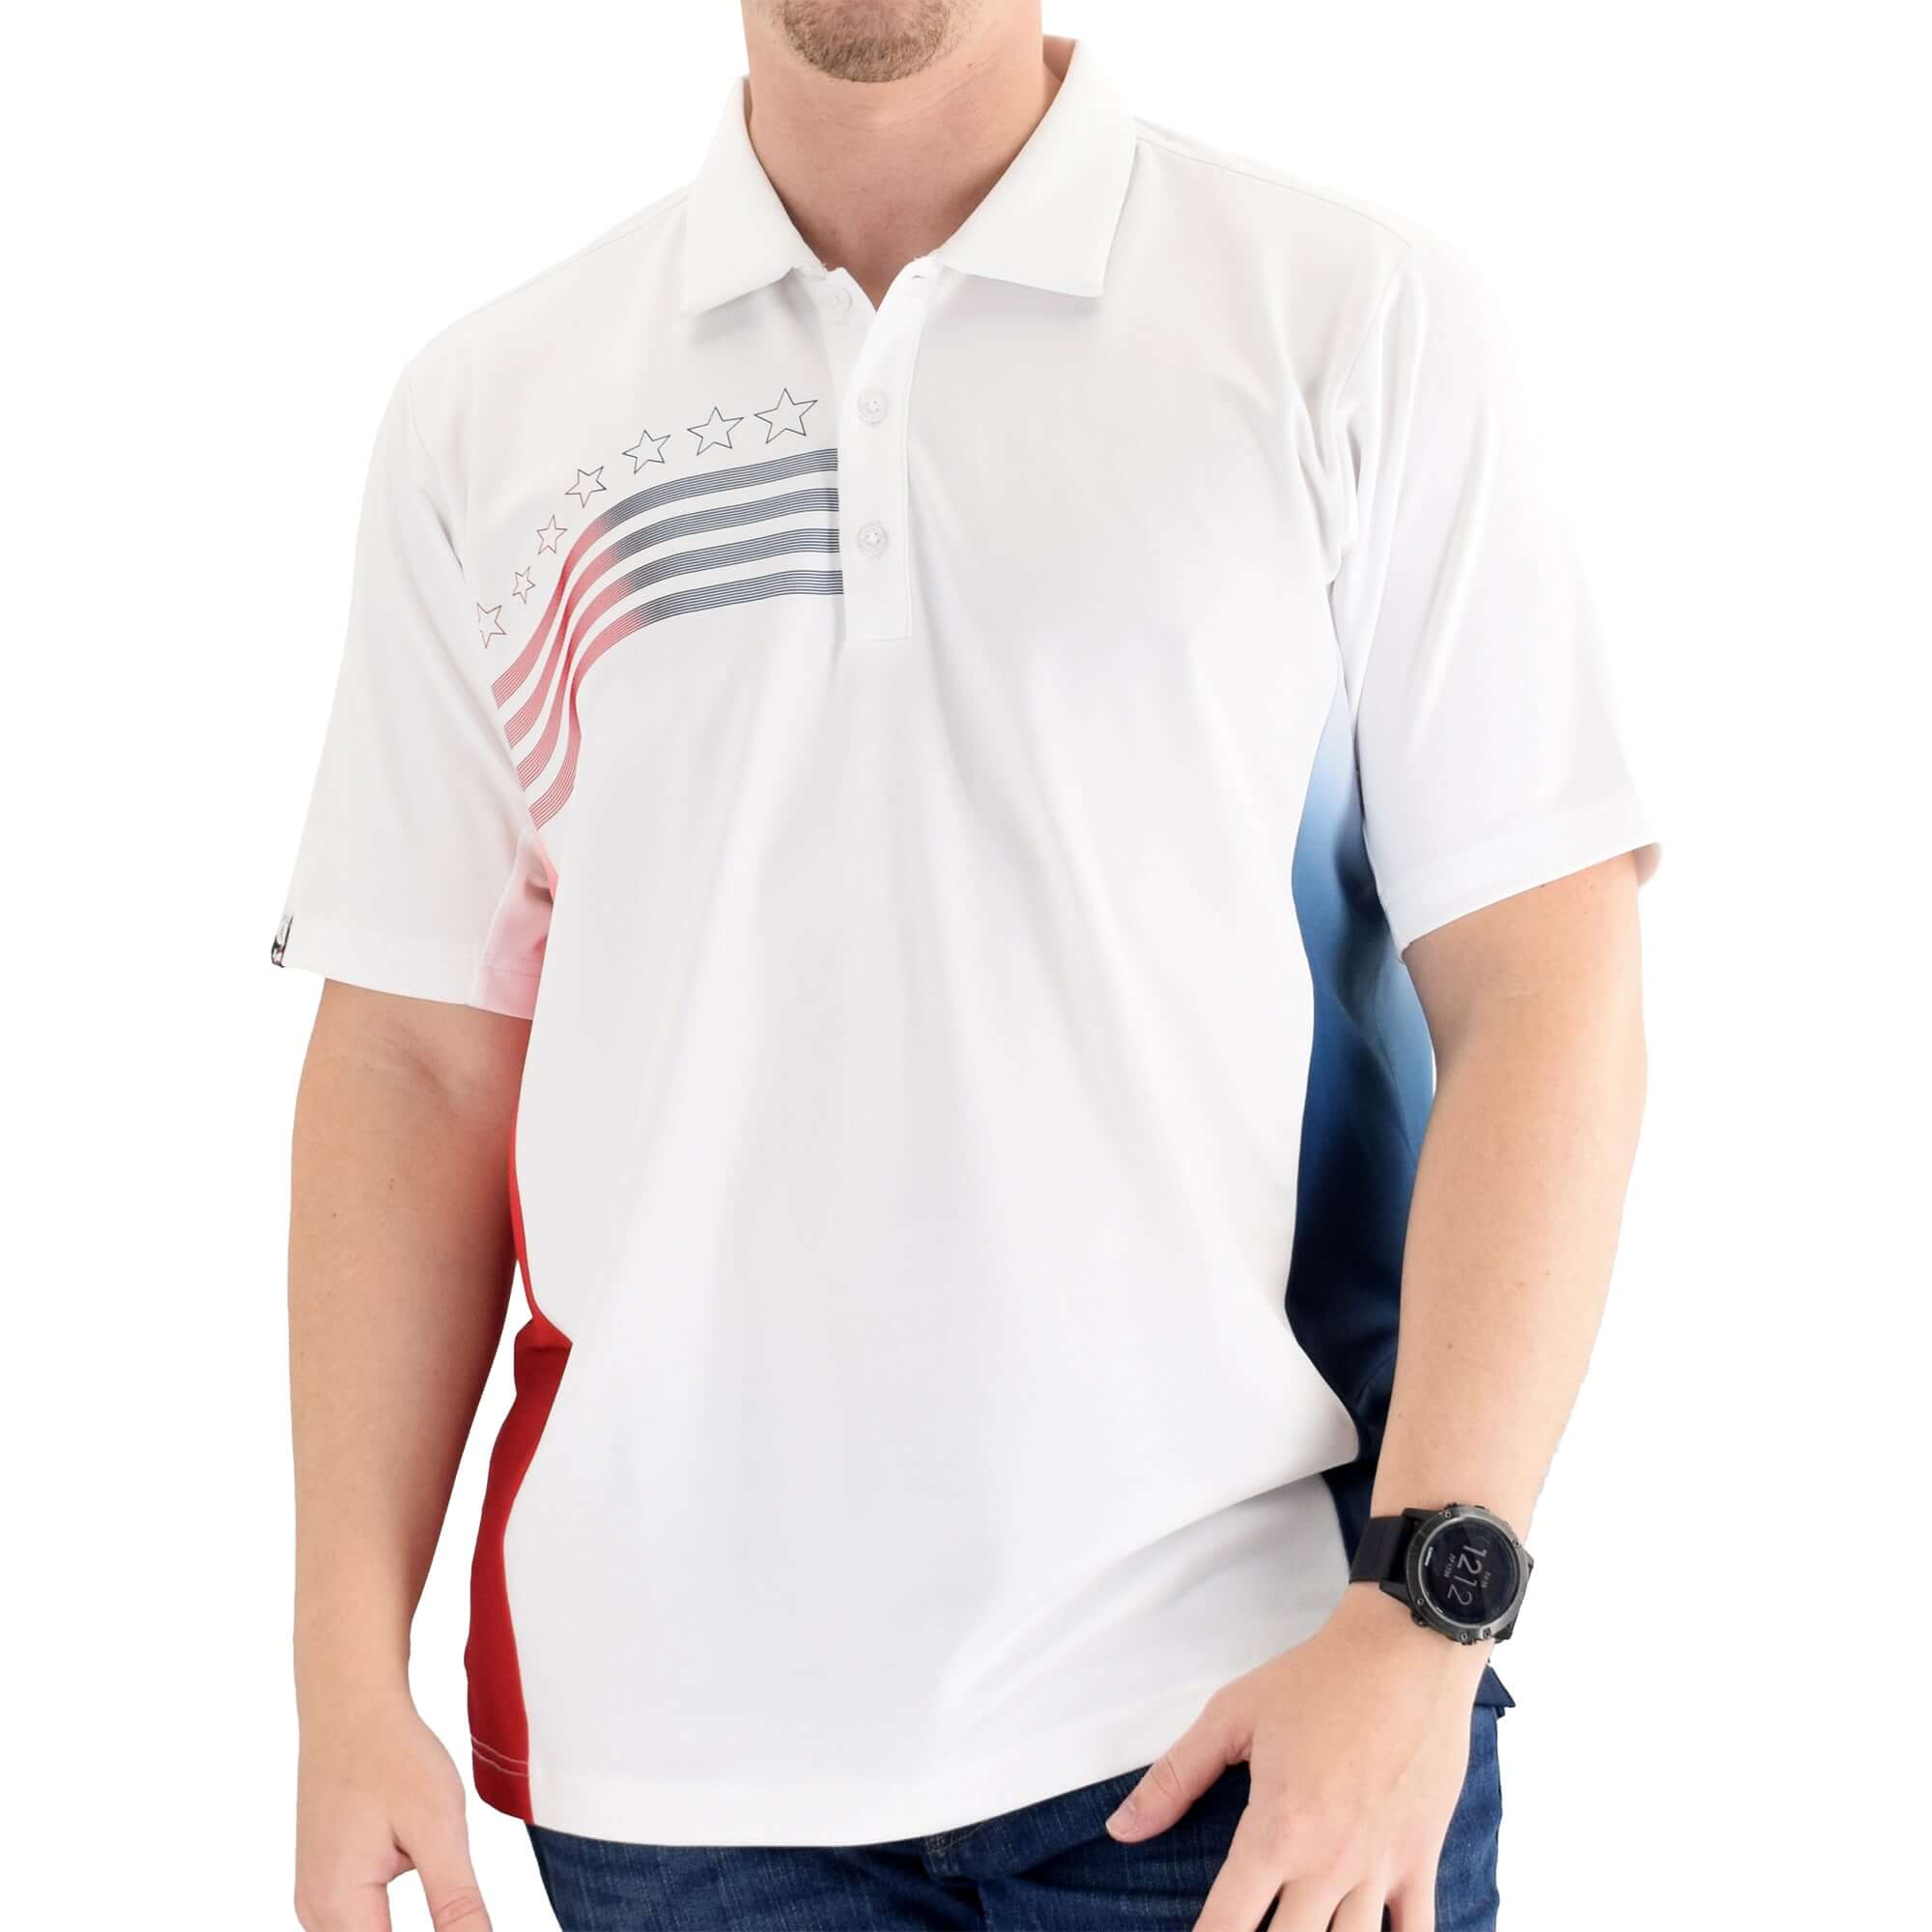 Mens liberty classic polo shirt white - the flag shirt